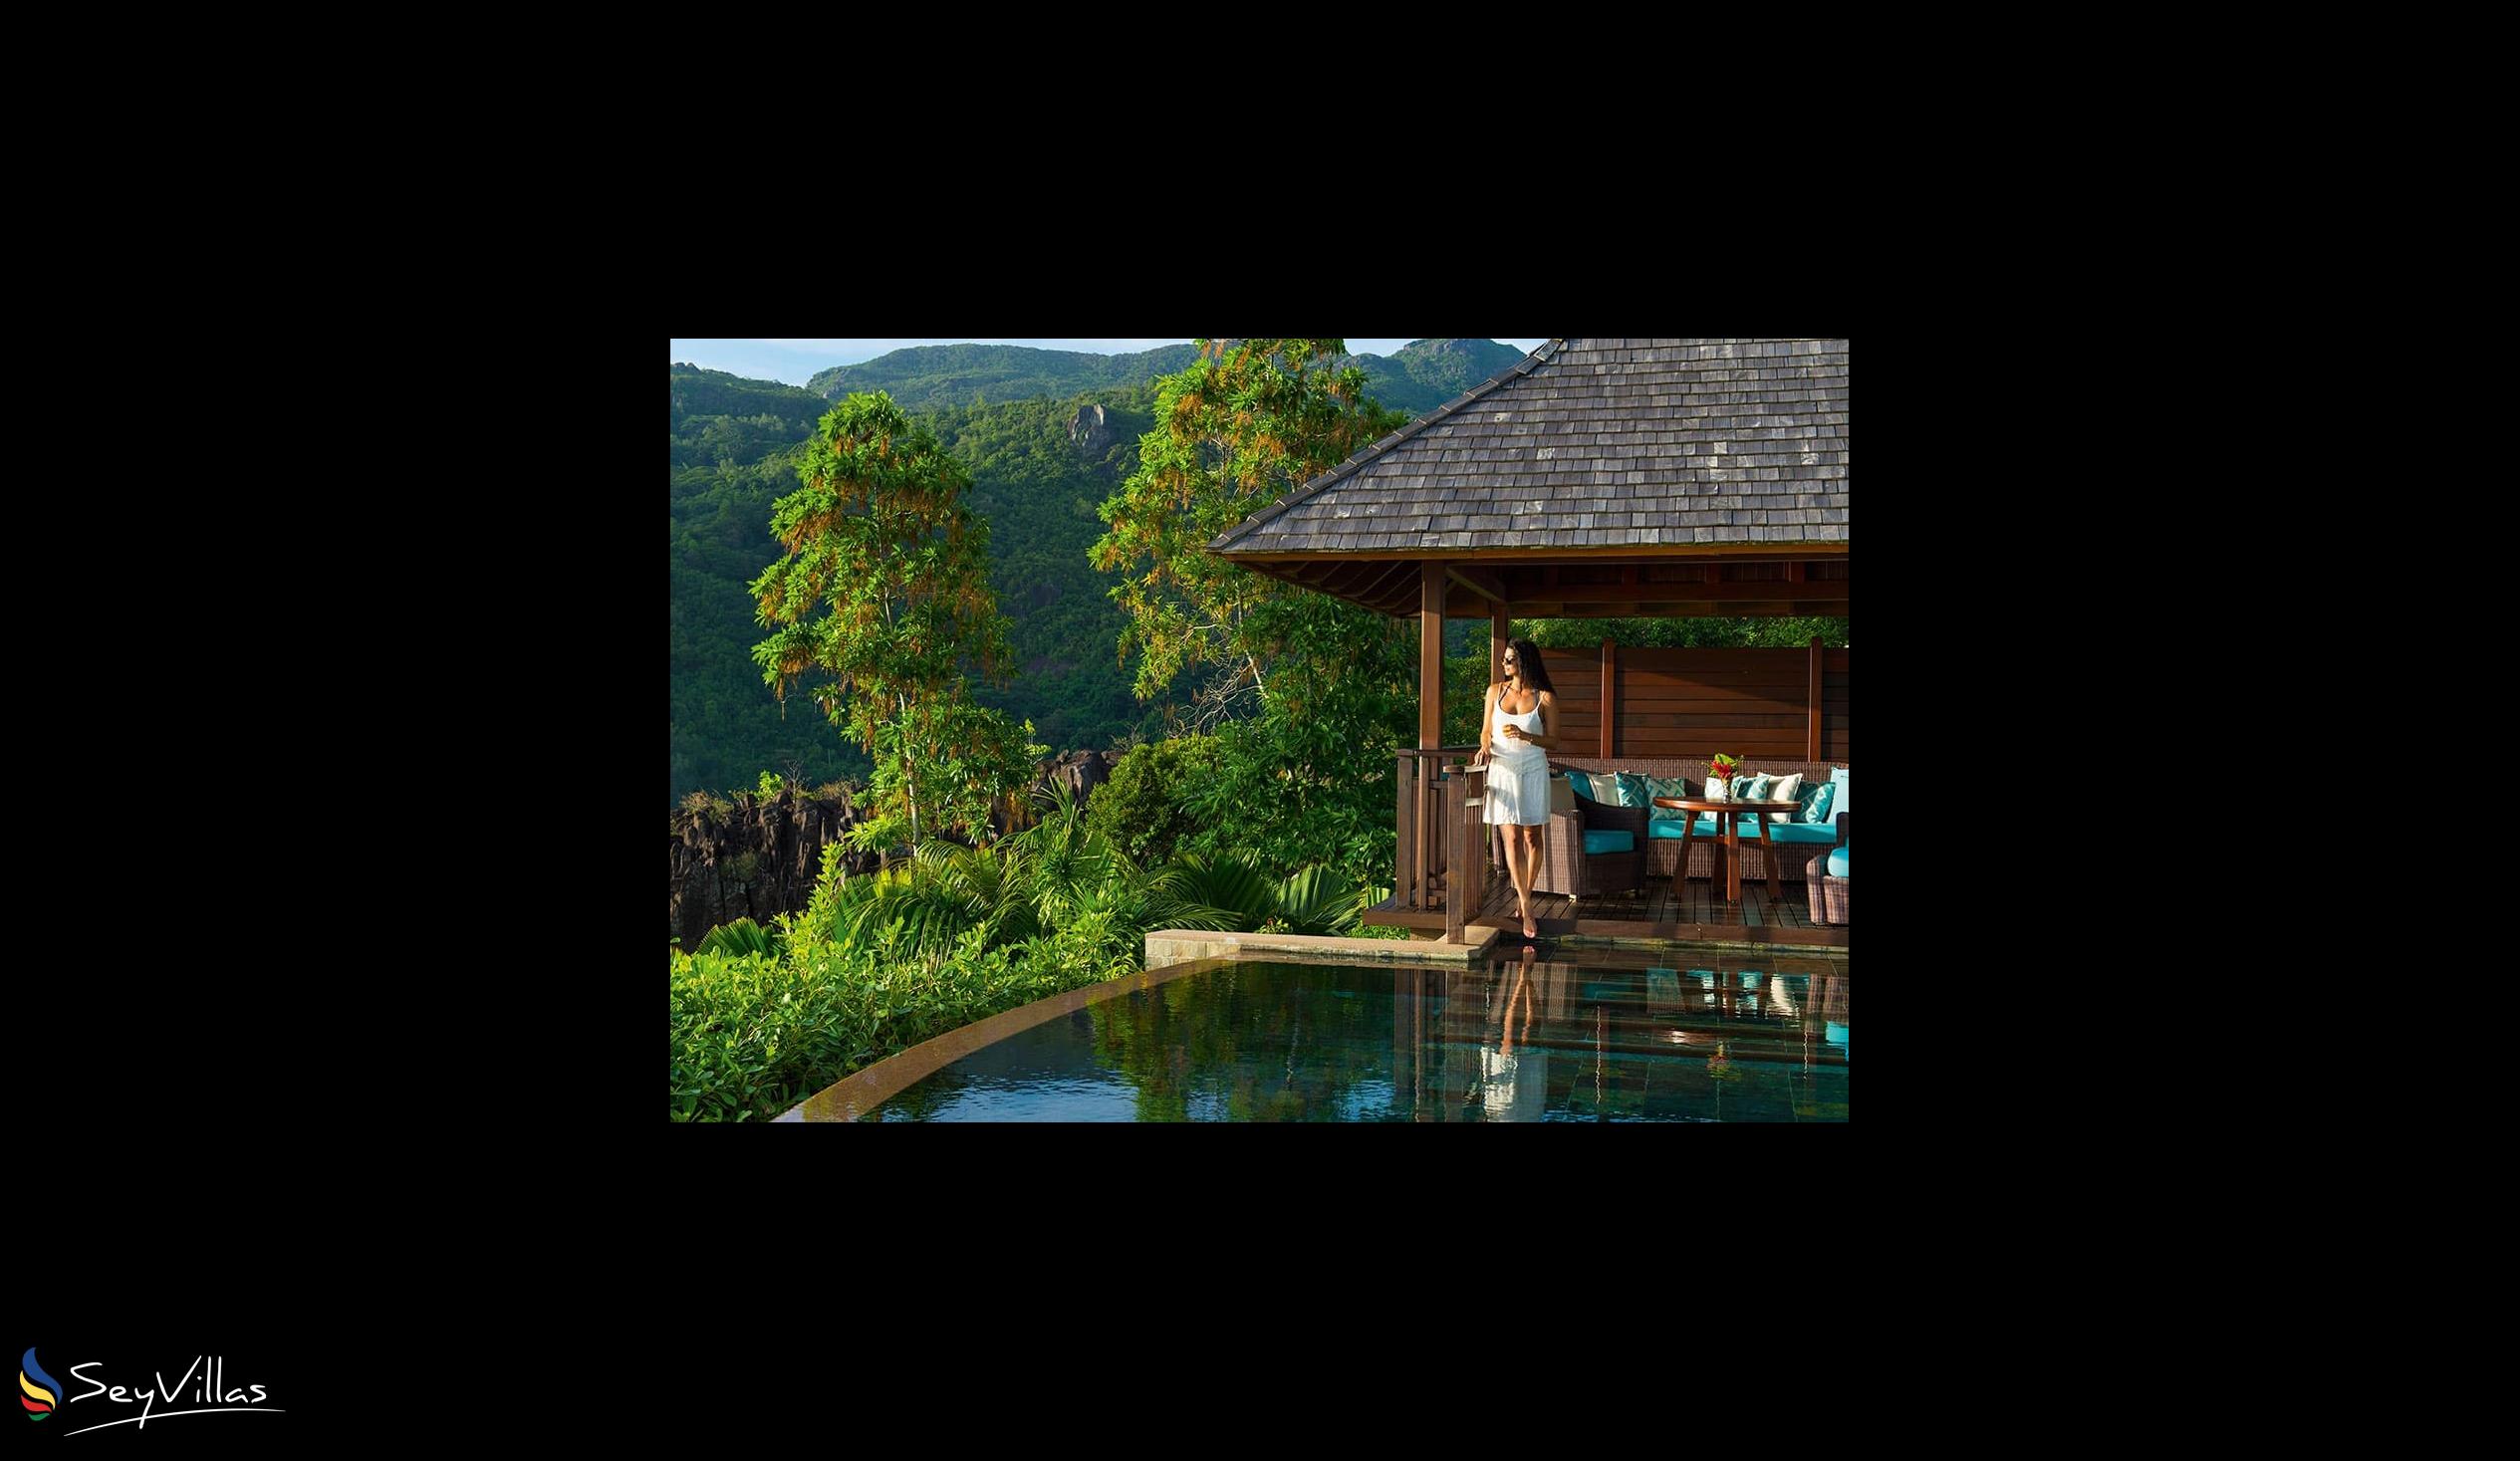 Photo 75: Constance Ephelia Seychelles - Presidential Villa - Mahé (Seychelles)